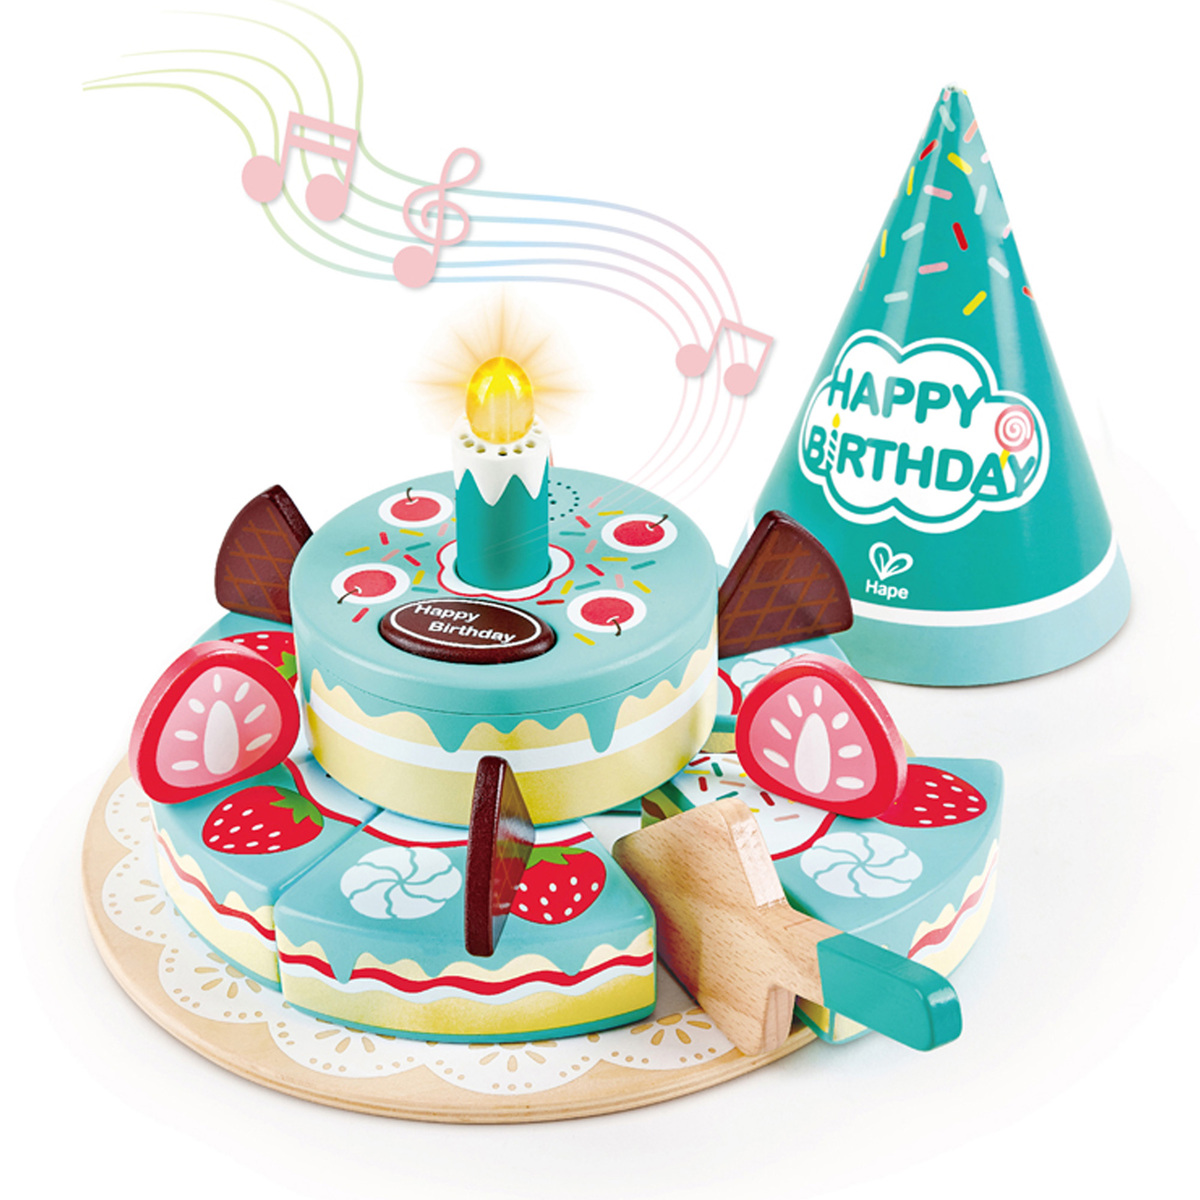 Hape Interactive Happy Birthday Cake Set for Kids, E3180